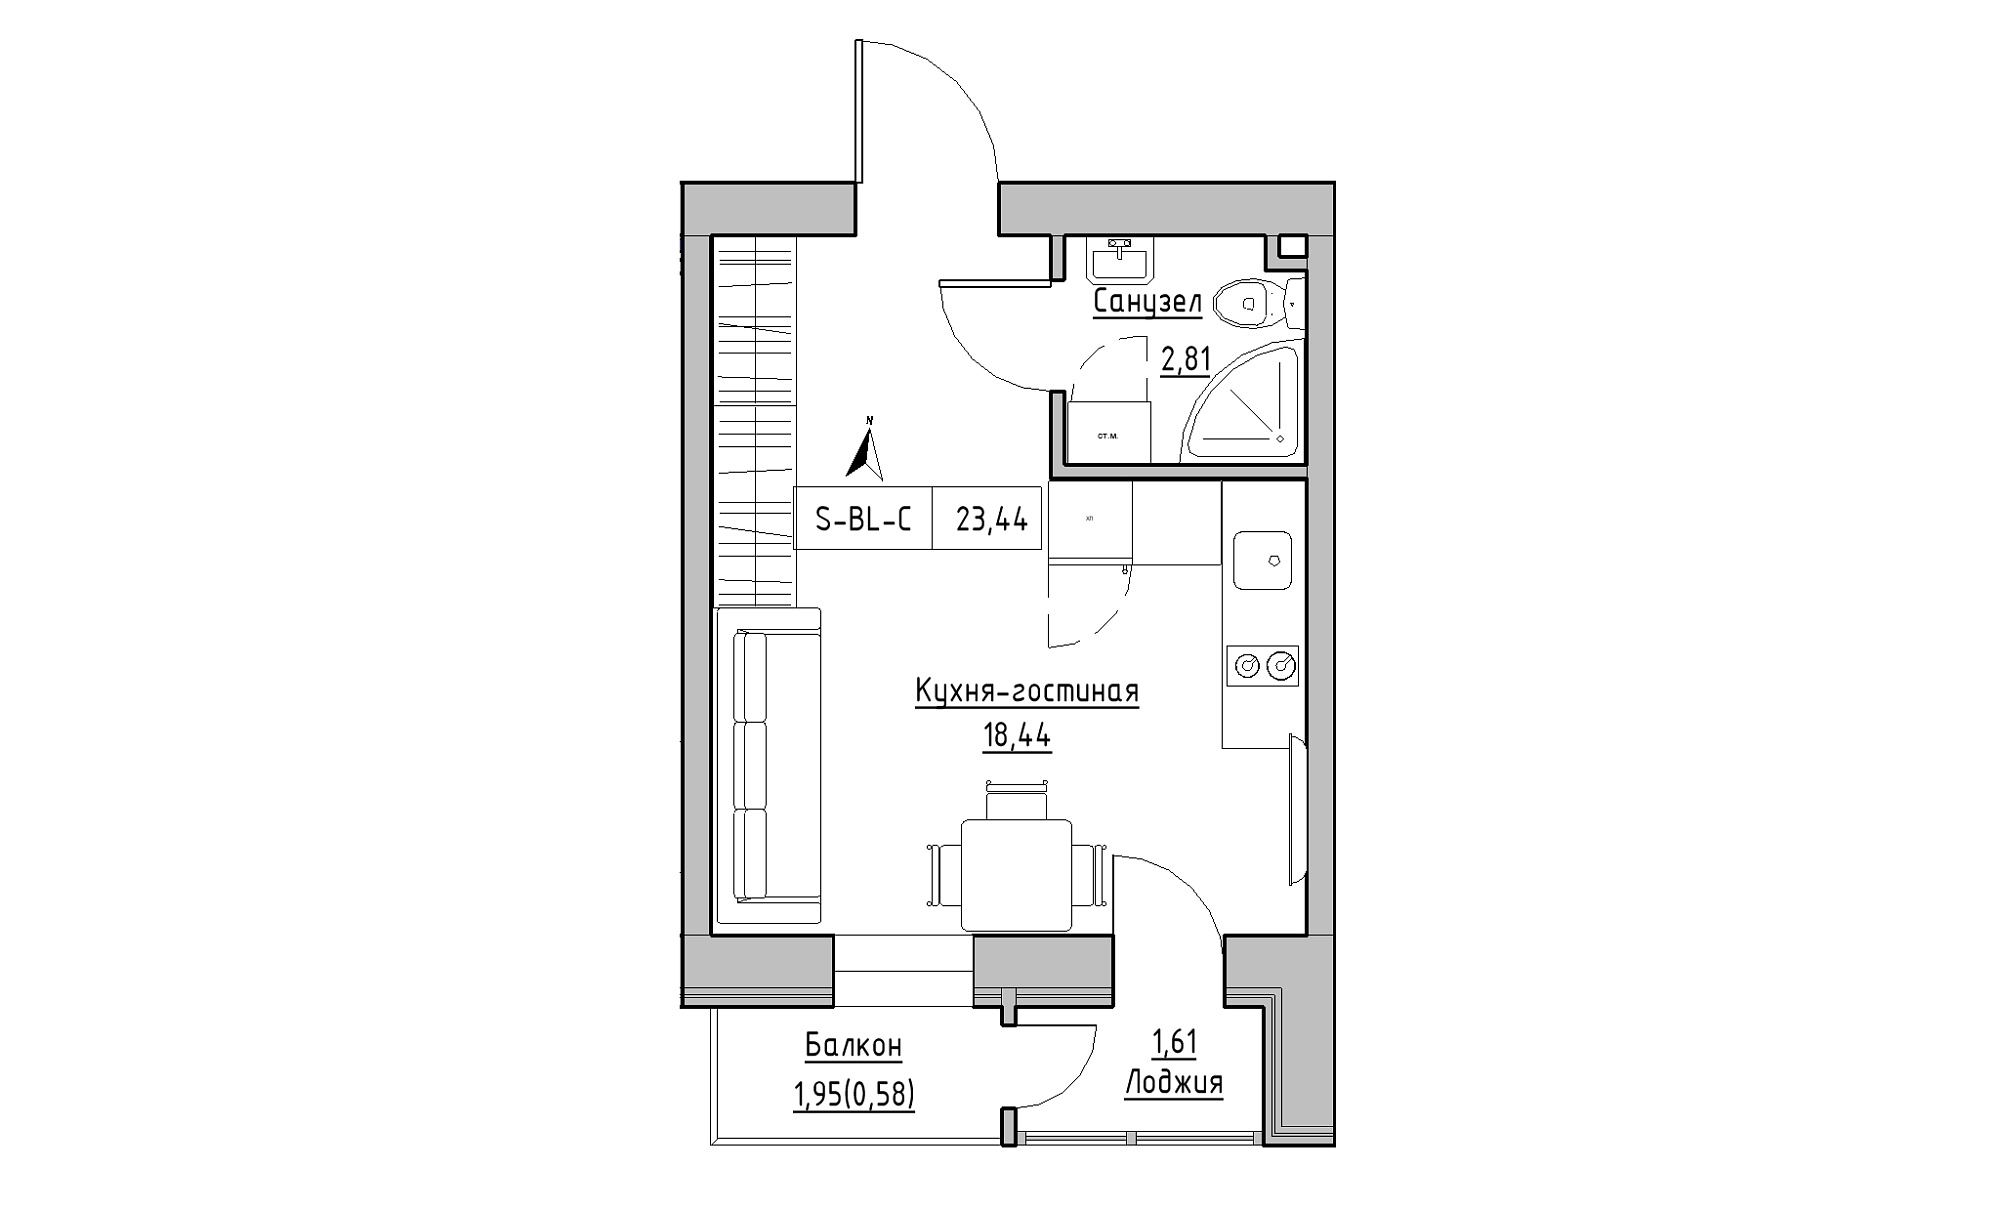 Planning Smart flats area 23.44m2, KS-023-04/0013.